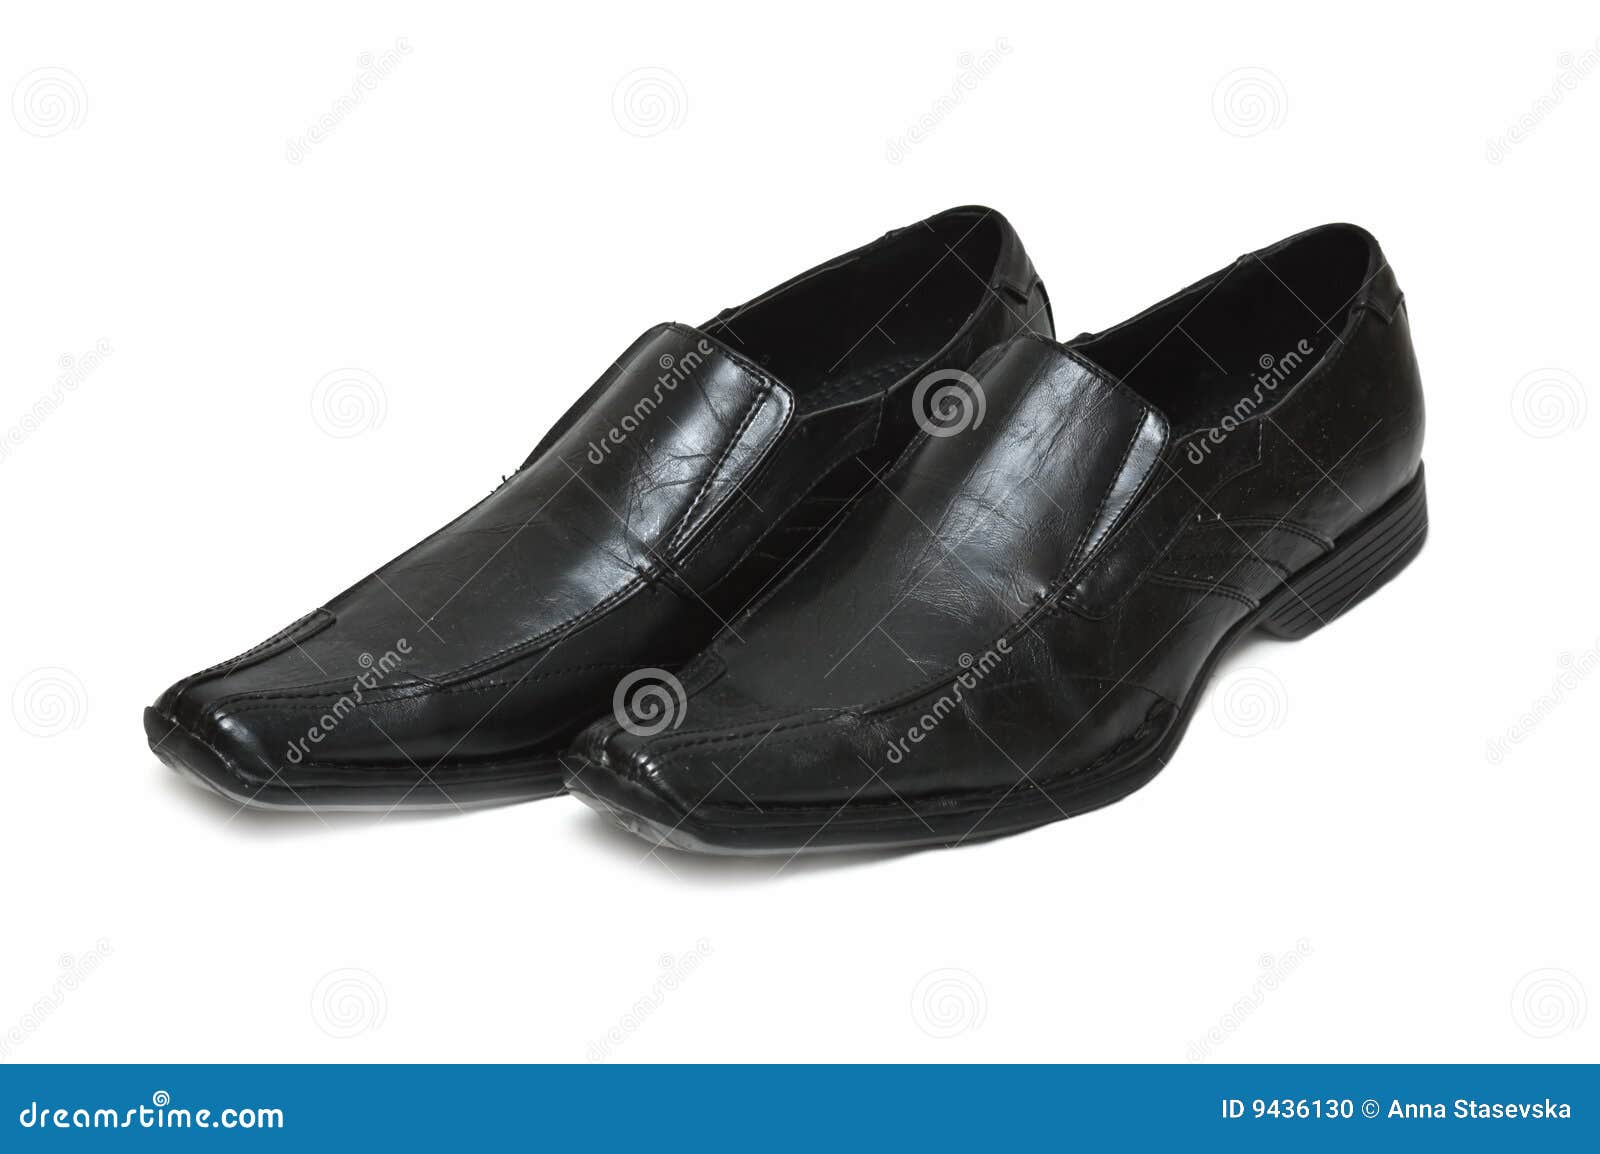 Black men shoes stock photo. Image of lace, british, craft - 9436130